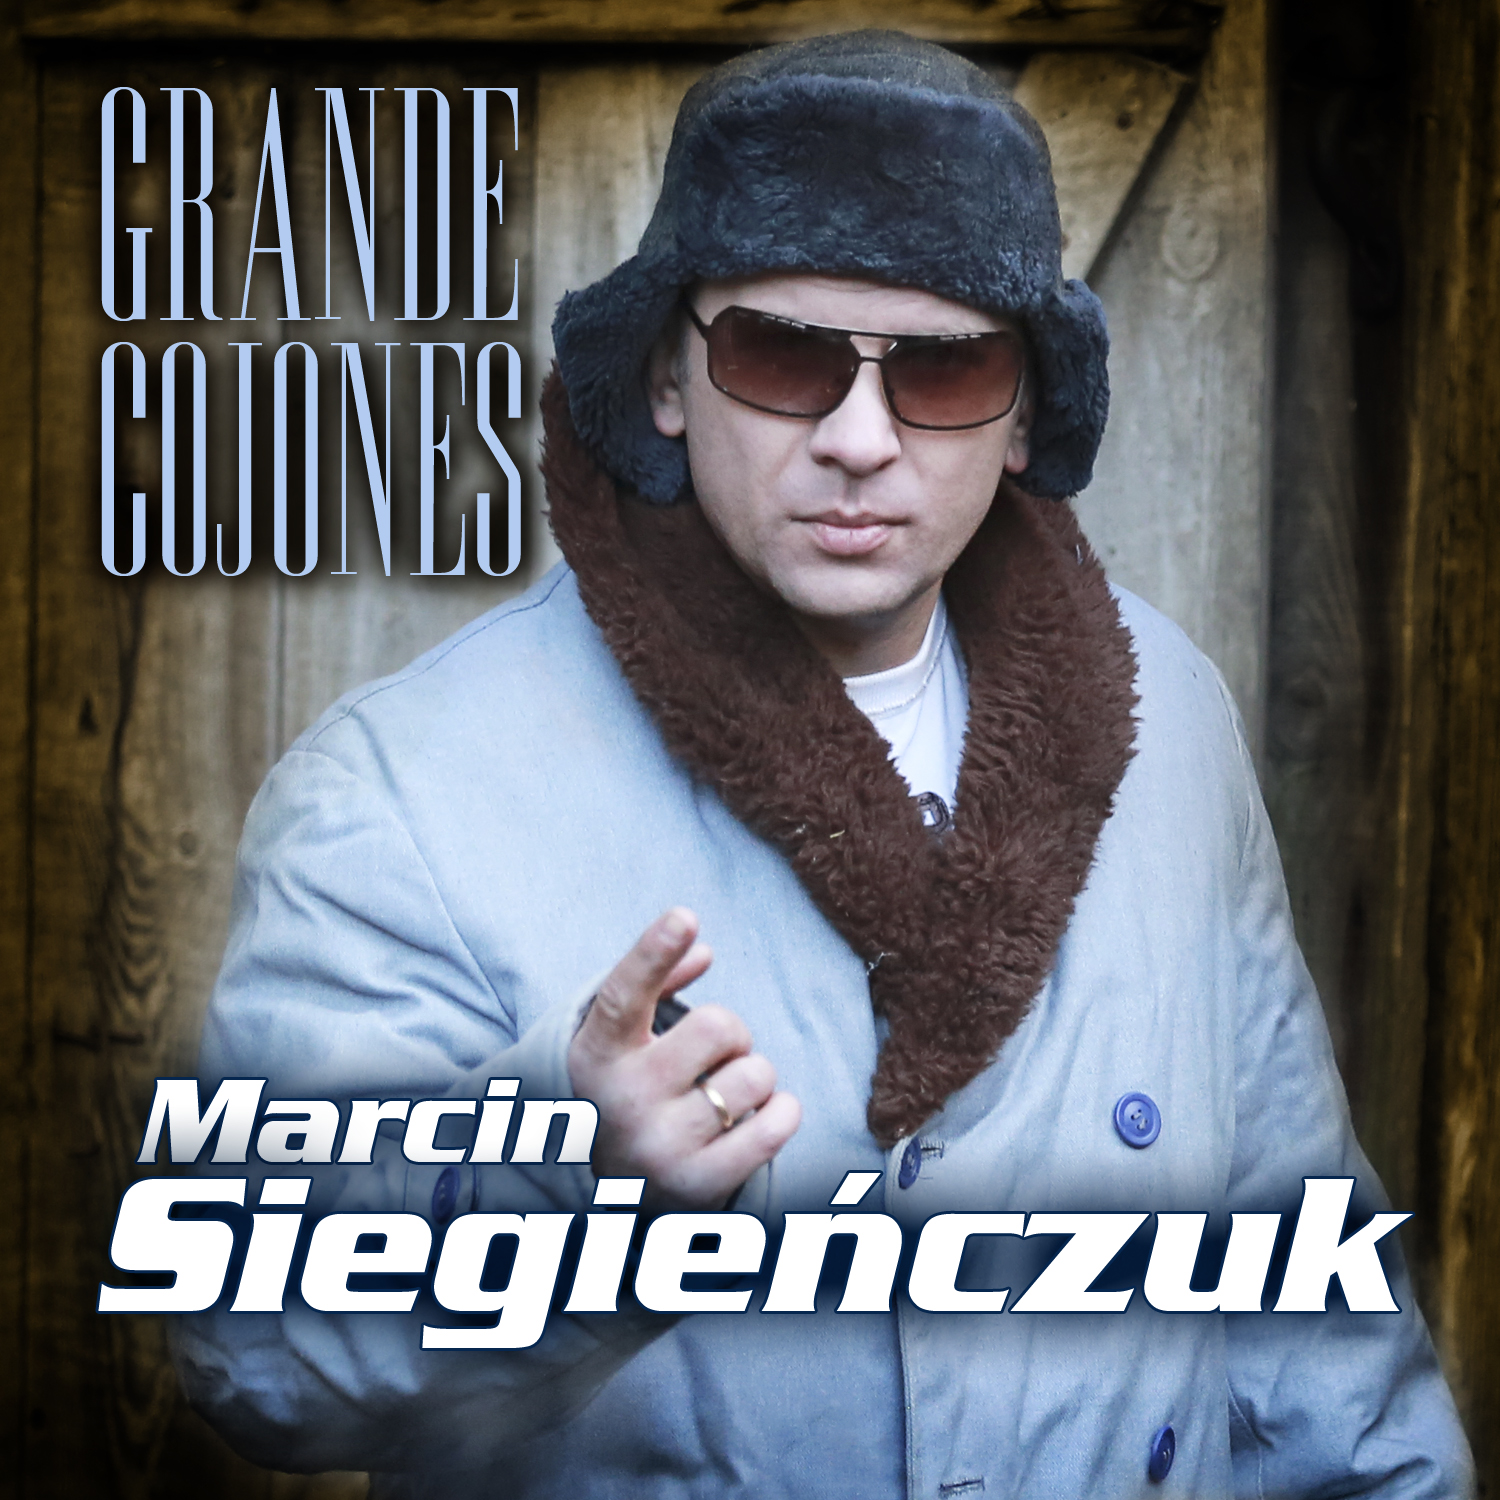 Marcin Siegieńczuk - Grande Cojones (Lucas O Extended Version)